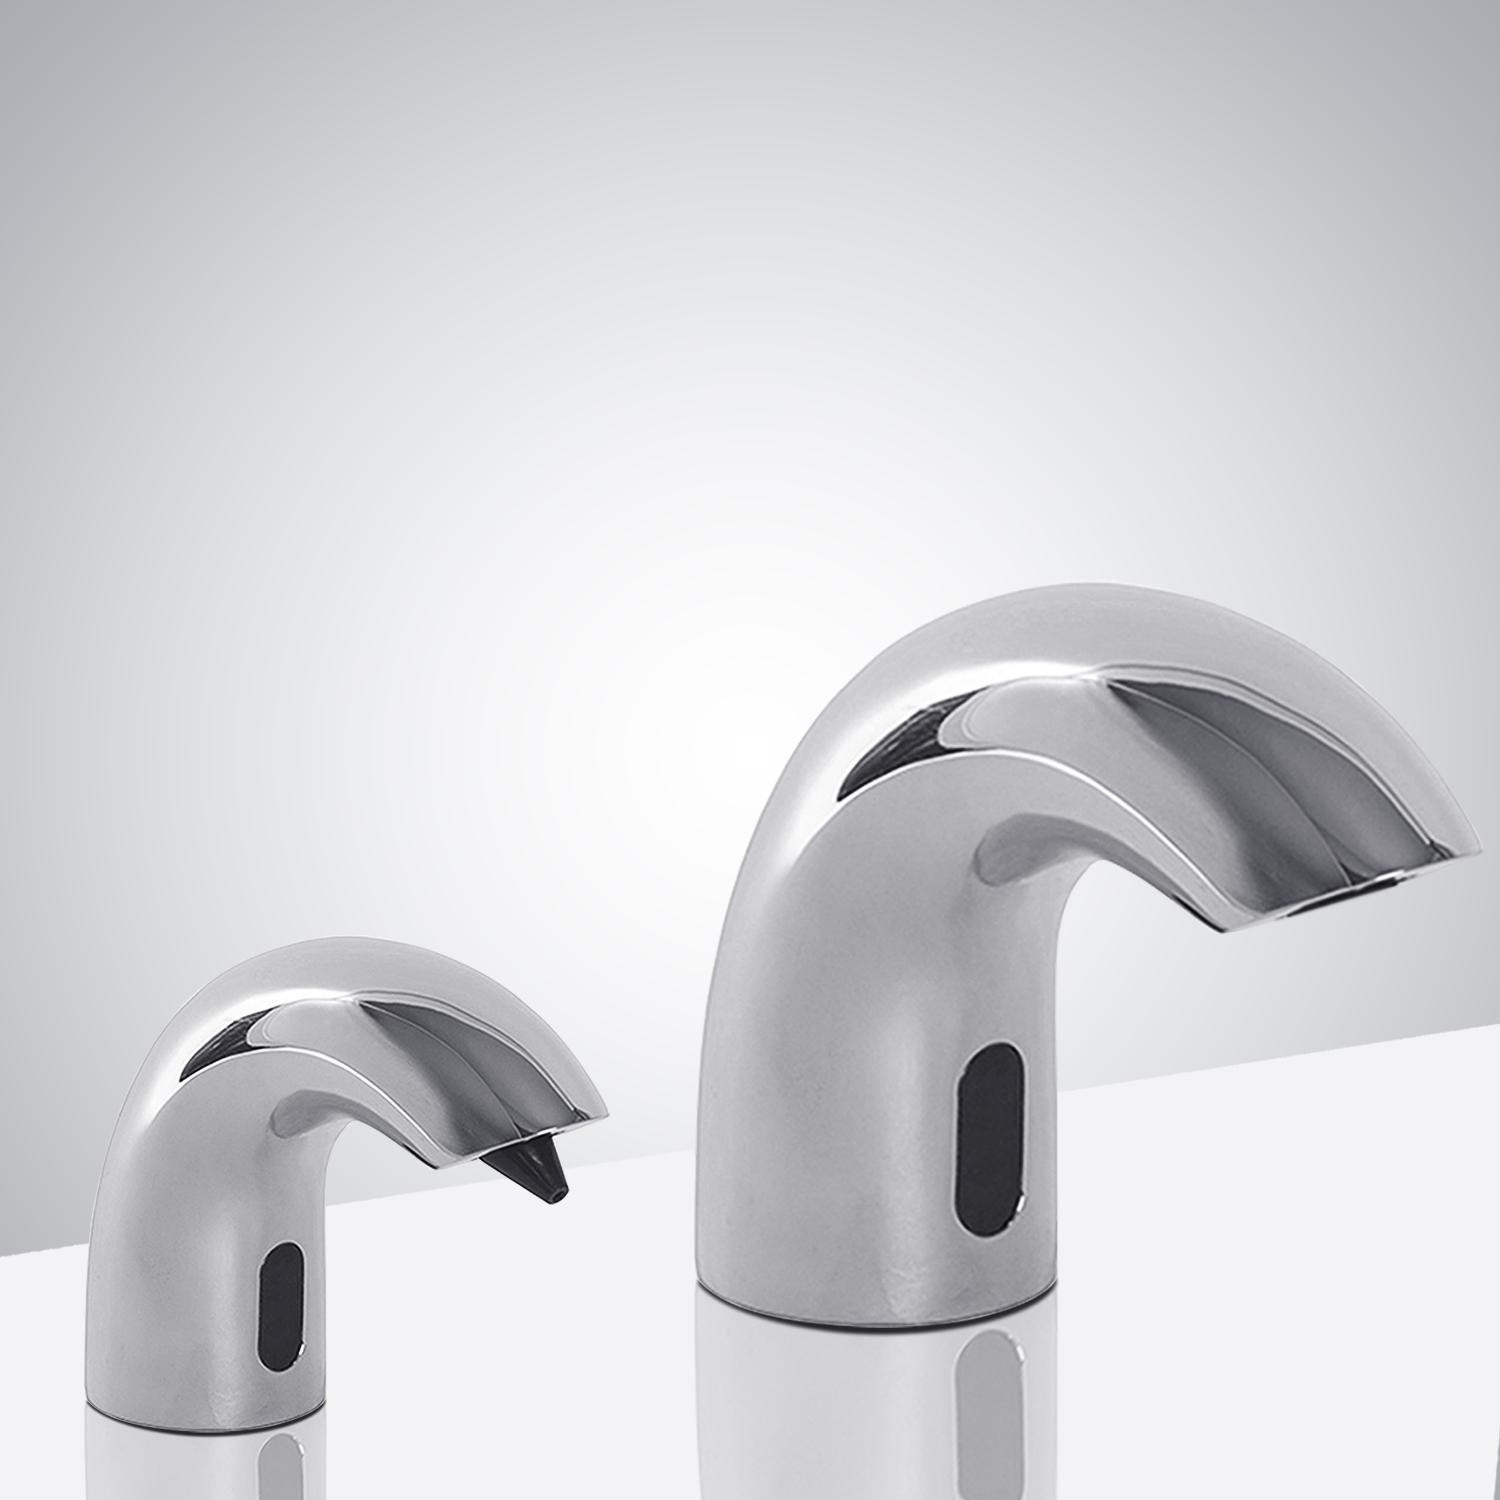 DUPLICATE Fontana Leo Chrome Finish Dual Automatic Commercial Sensor Faucet And Soap Dispenser